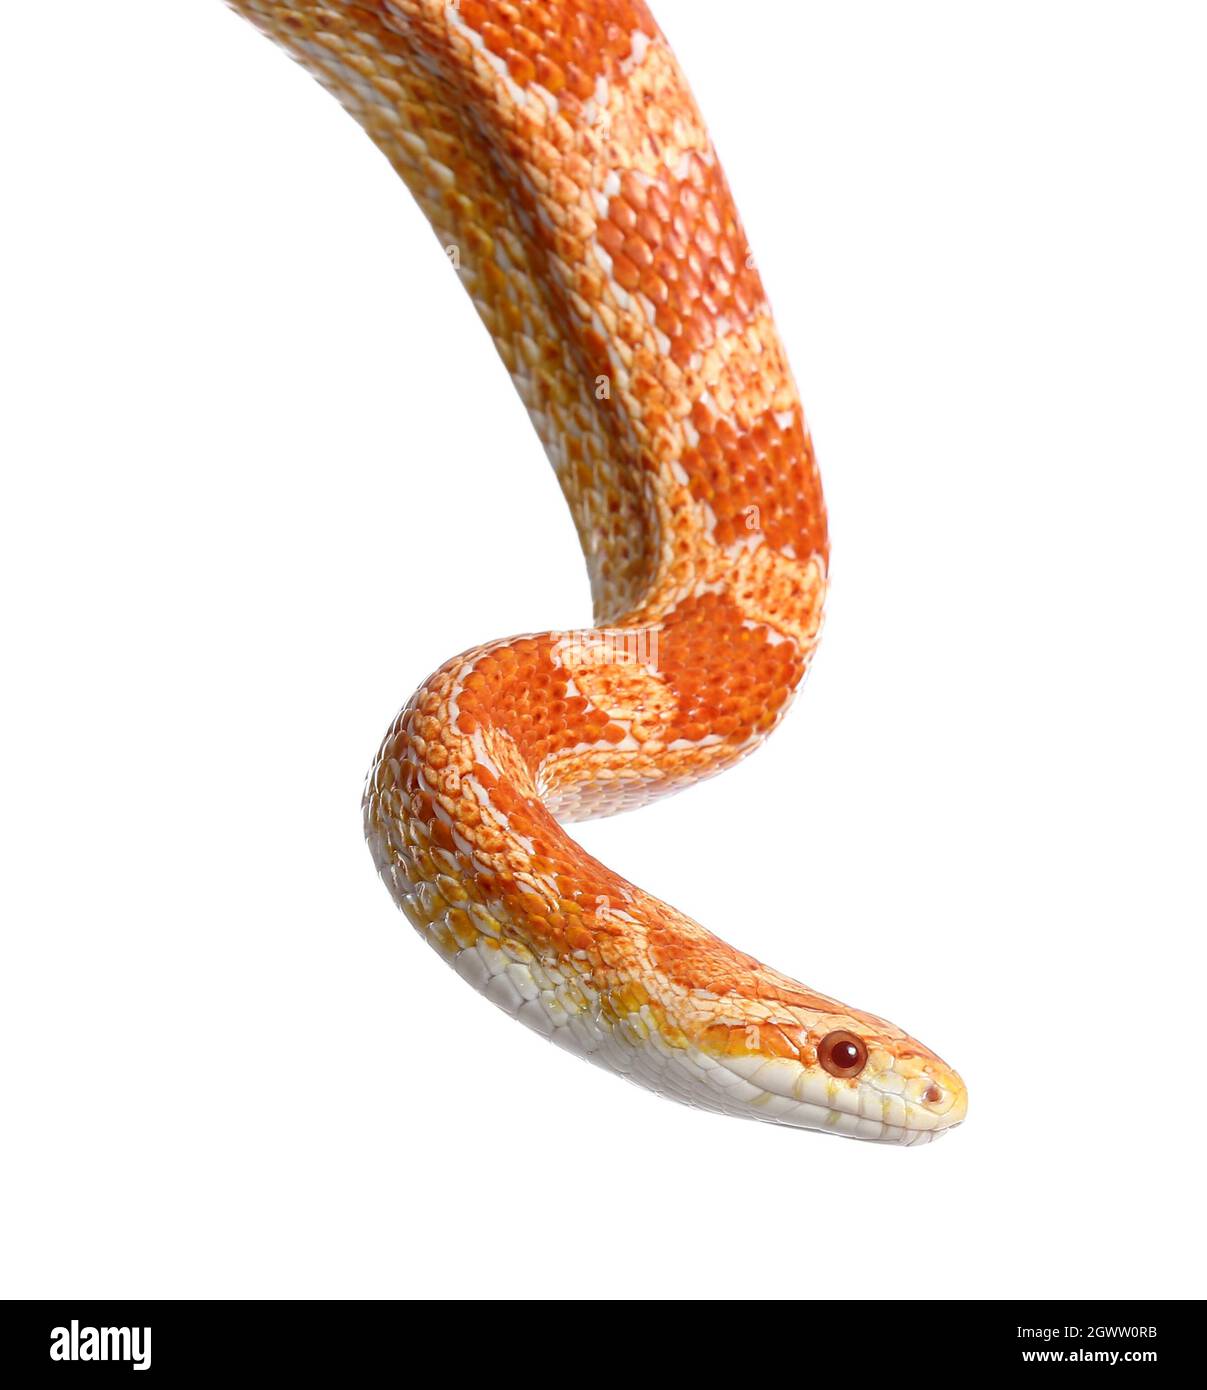 Corn snake on white background Stock Photo - Alamy